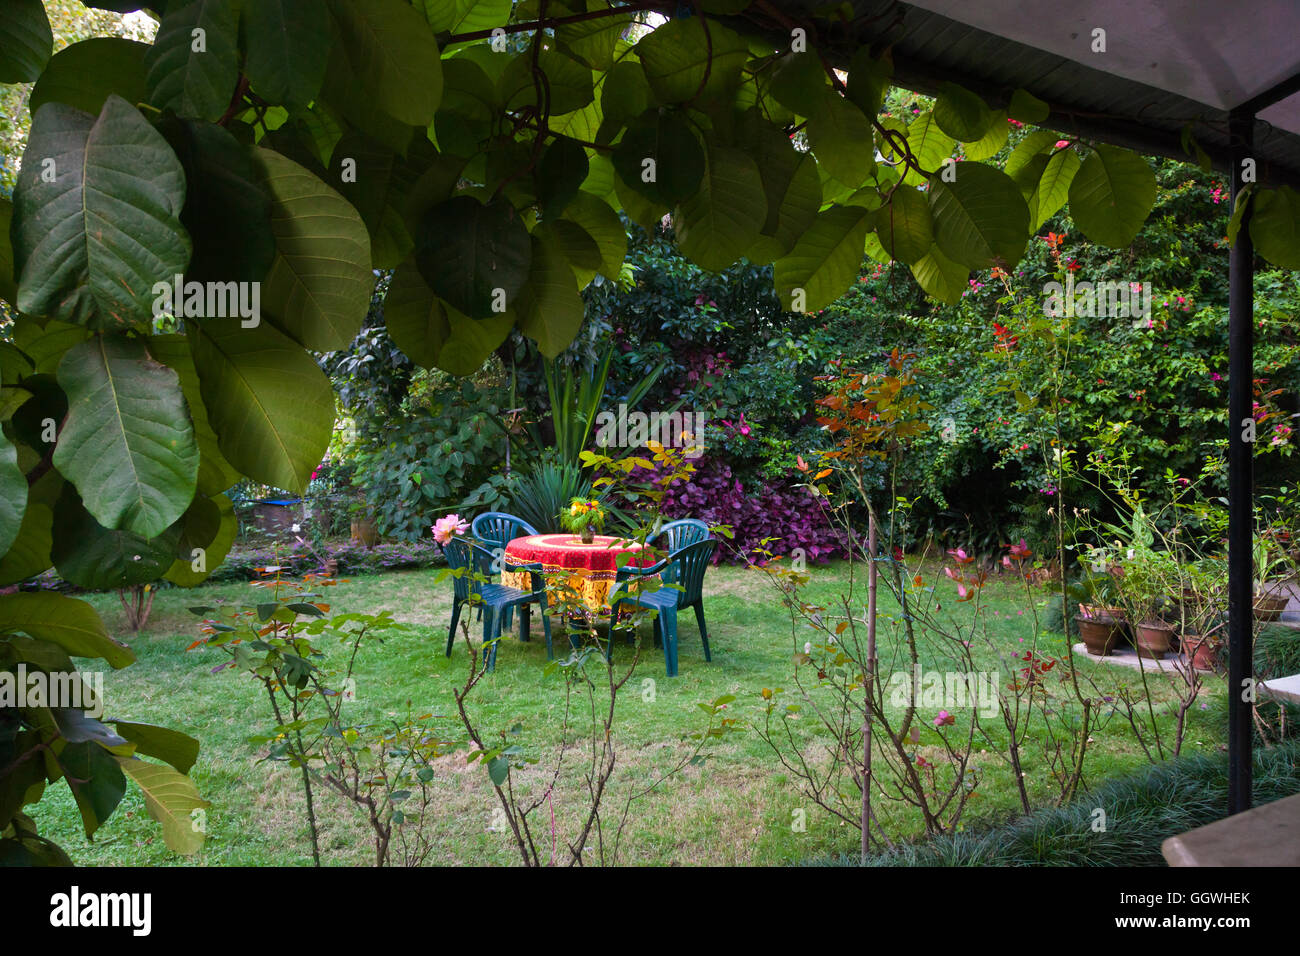 Keshab and Sushma Regmi's garden - KATHMANDU, NEPAL Stock Photo